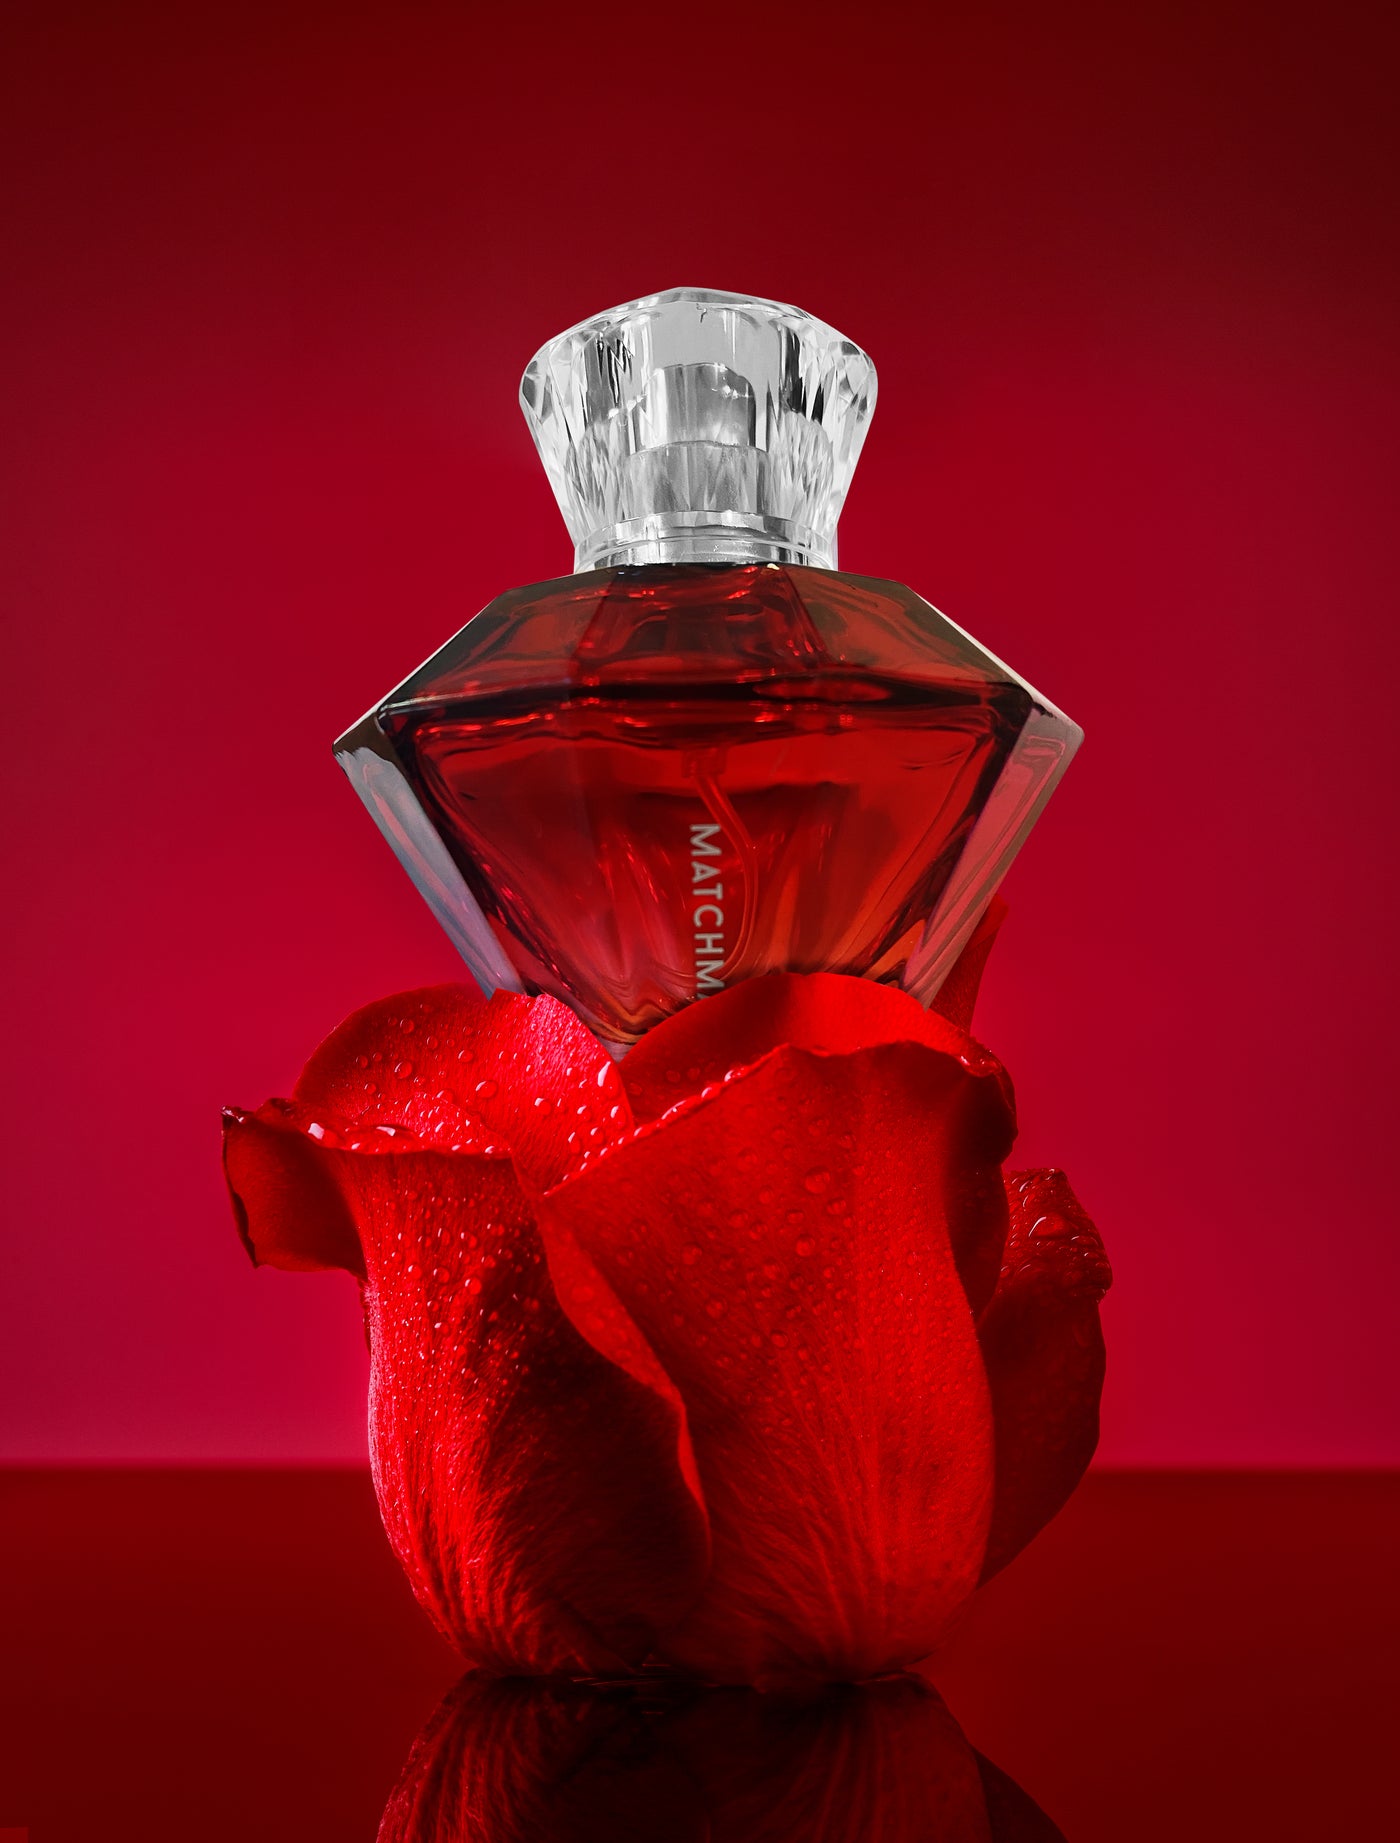 Matchmaker Red Diamond Pheromone Parfum - Attract Him